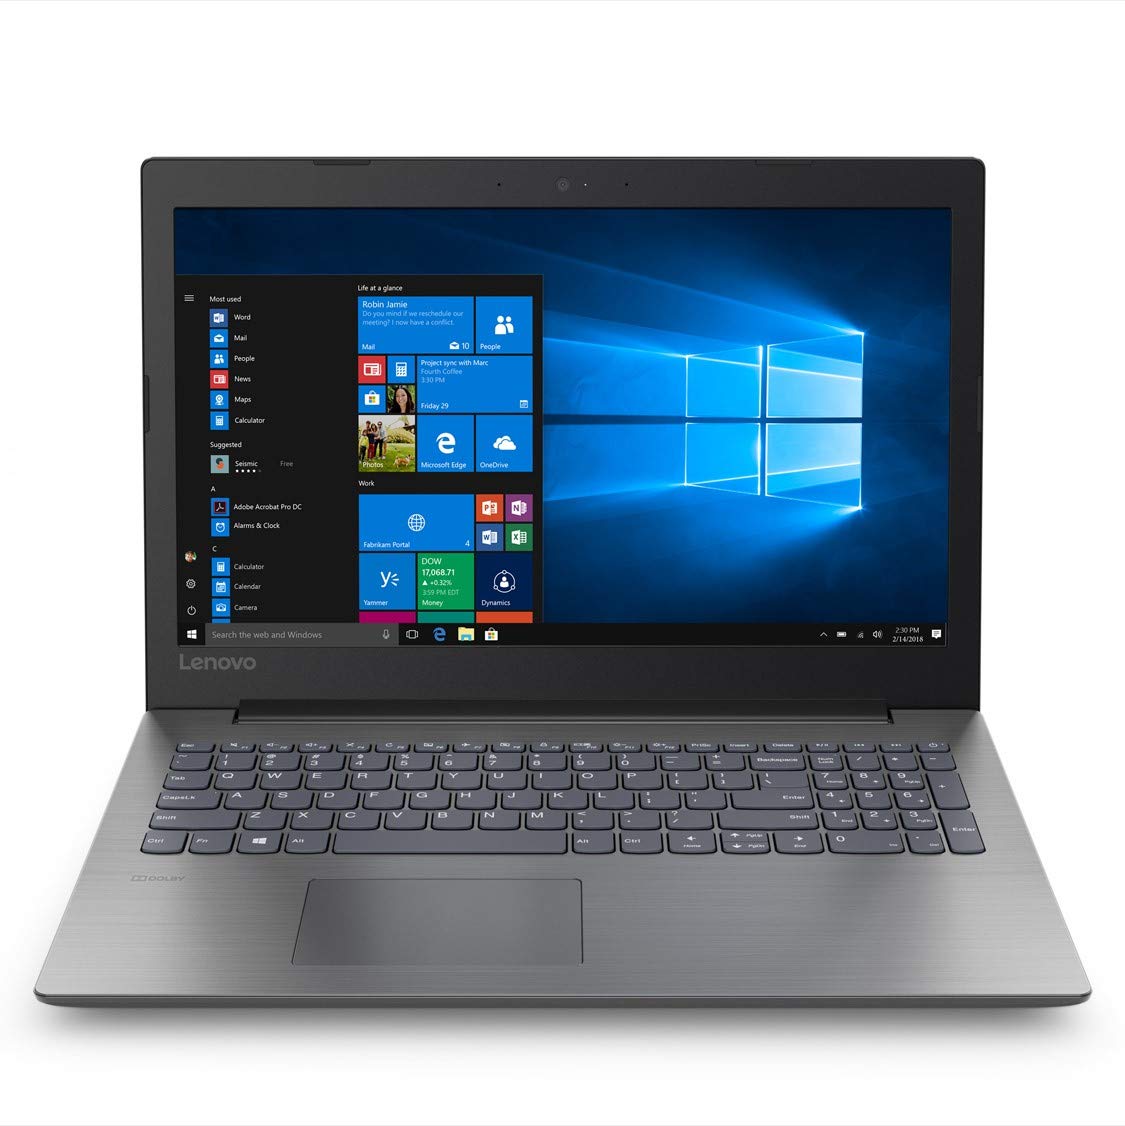 Lenovo Ideapad 330 81D100JSIN 15.6-inch Laptop (N5000/4GB/1TB/Windows 10/Integrated Graphics), Onyx Black